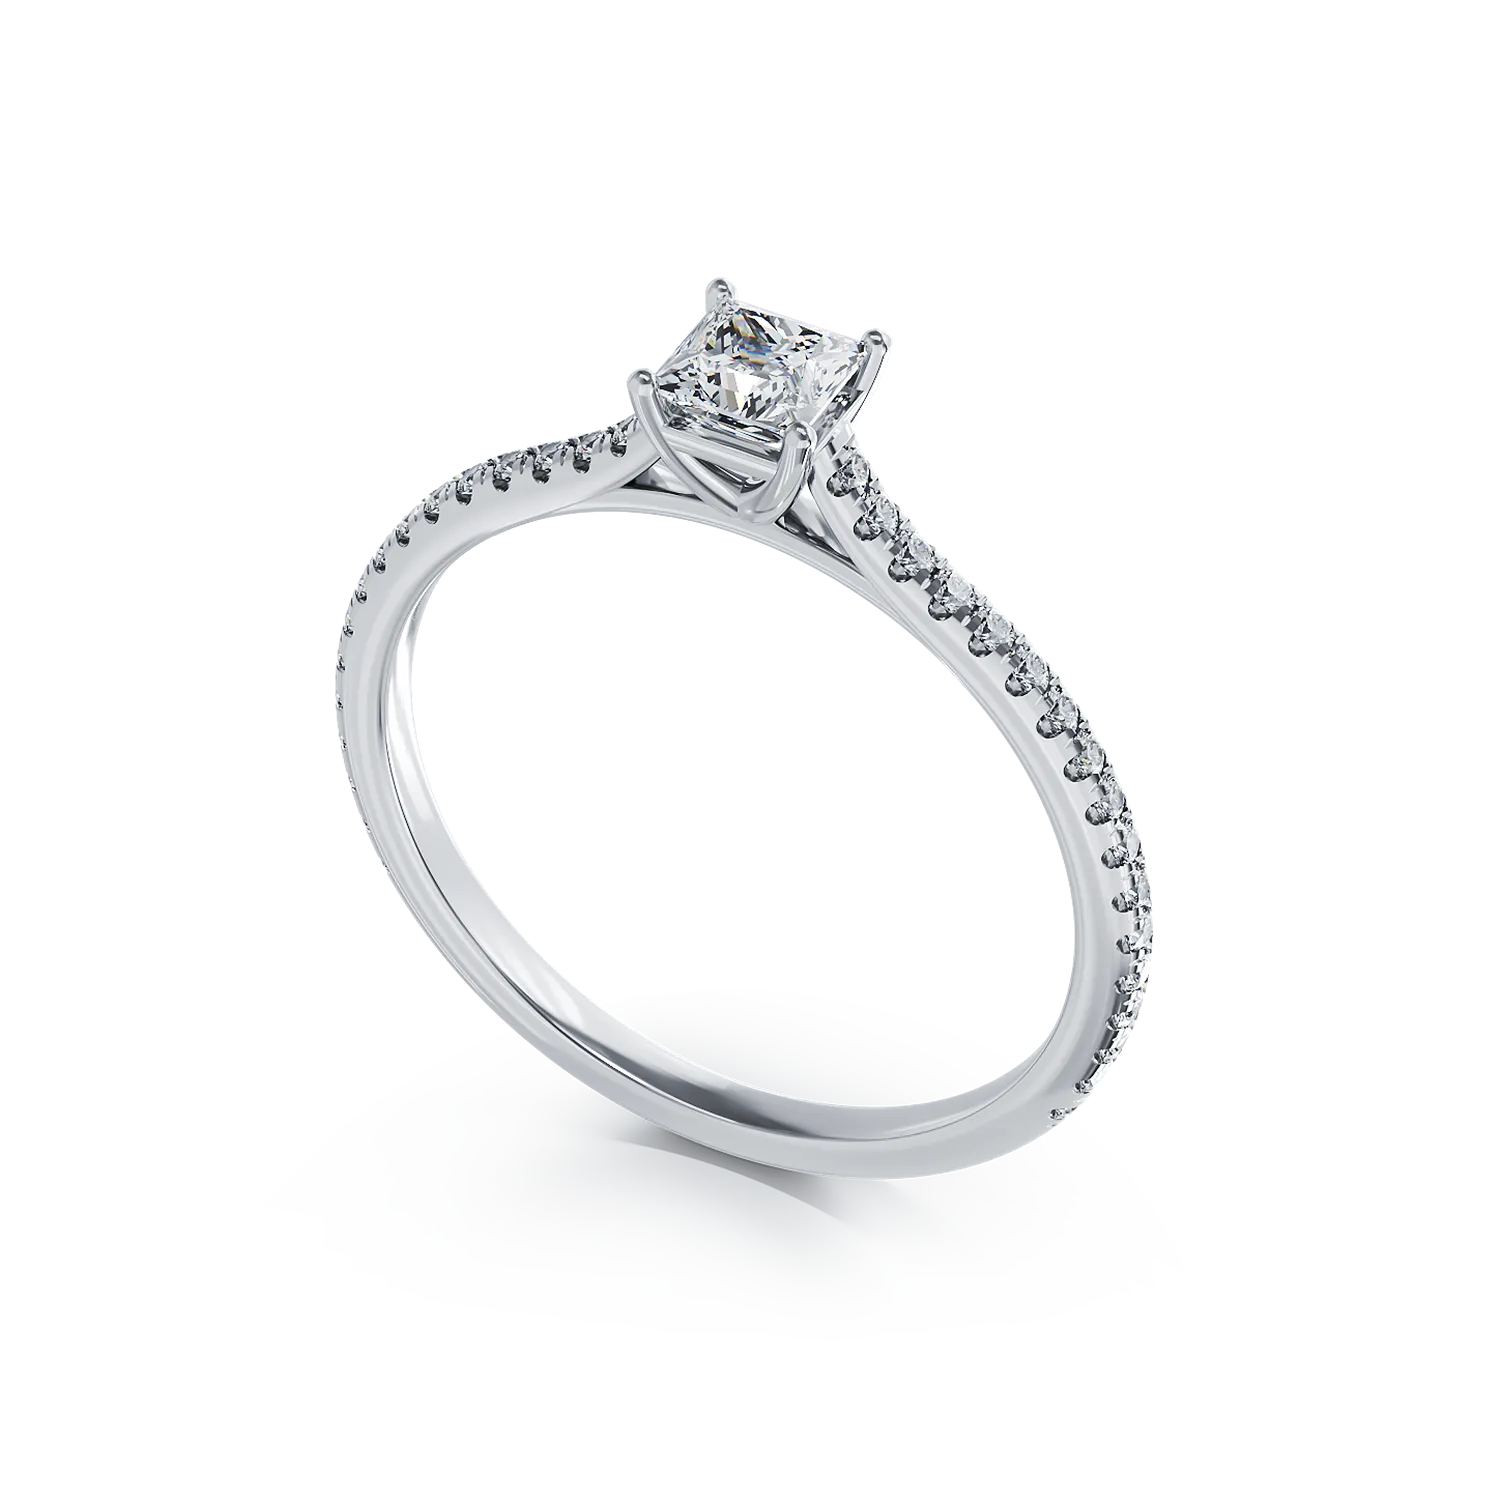 Platinum engagement ring with 0.32ct diamond and 0.17ct diamonds